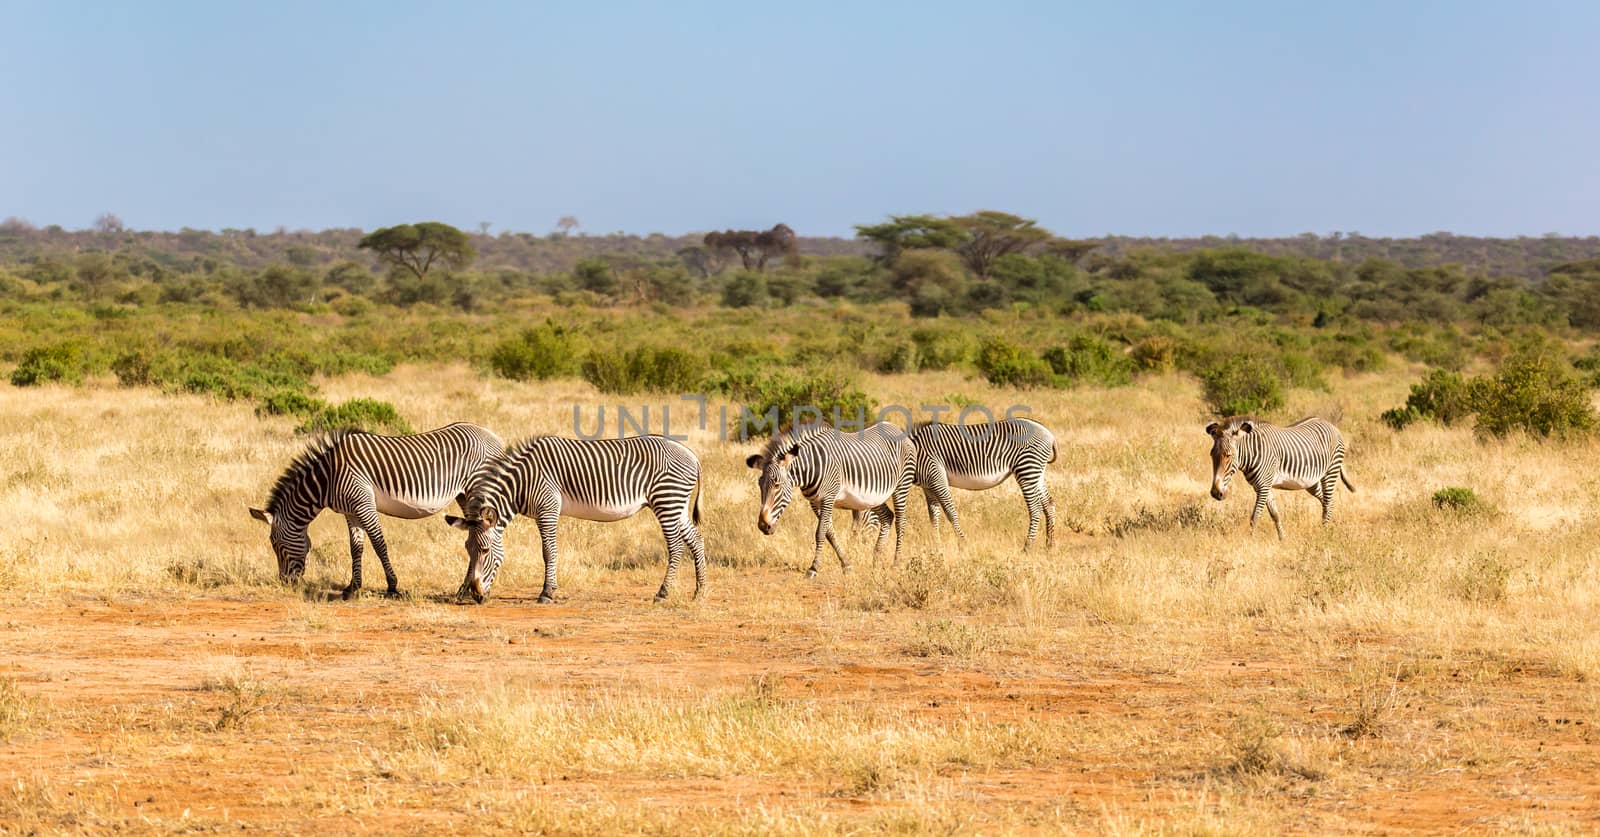 Large herd with zebras grazing in the savannah of Kenya by 25ehaag6